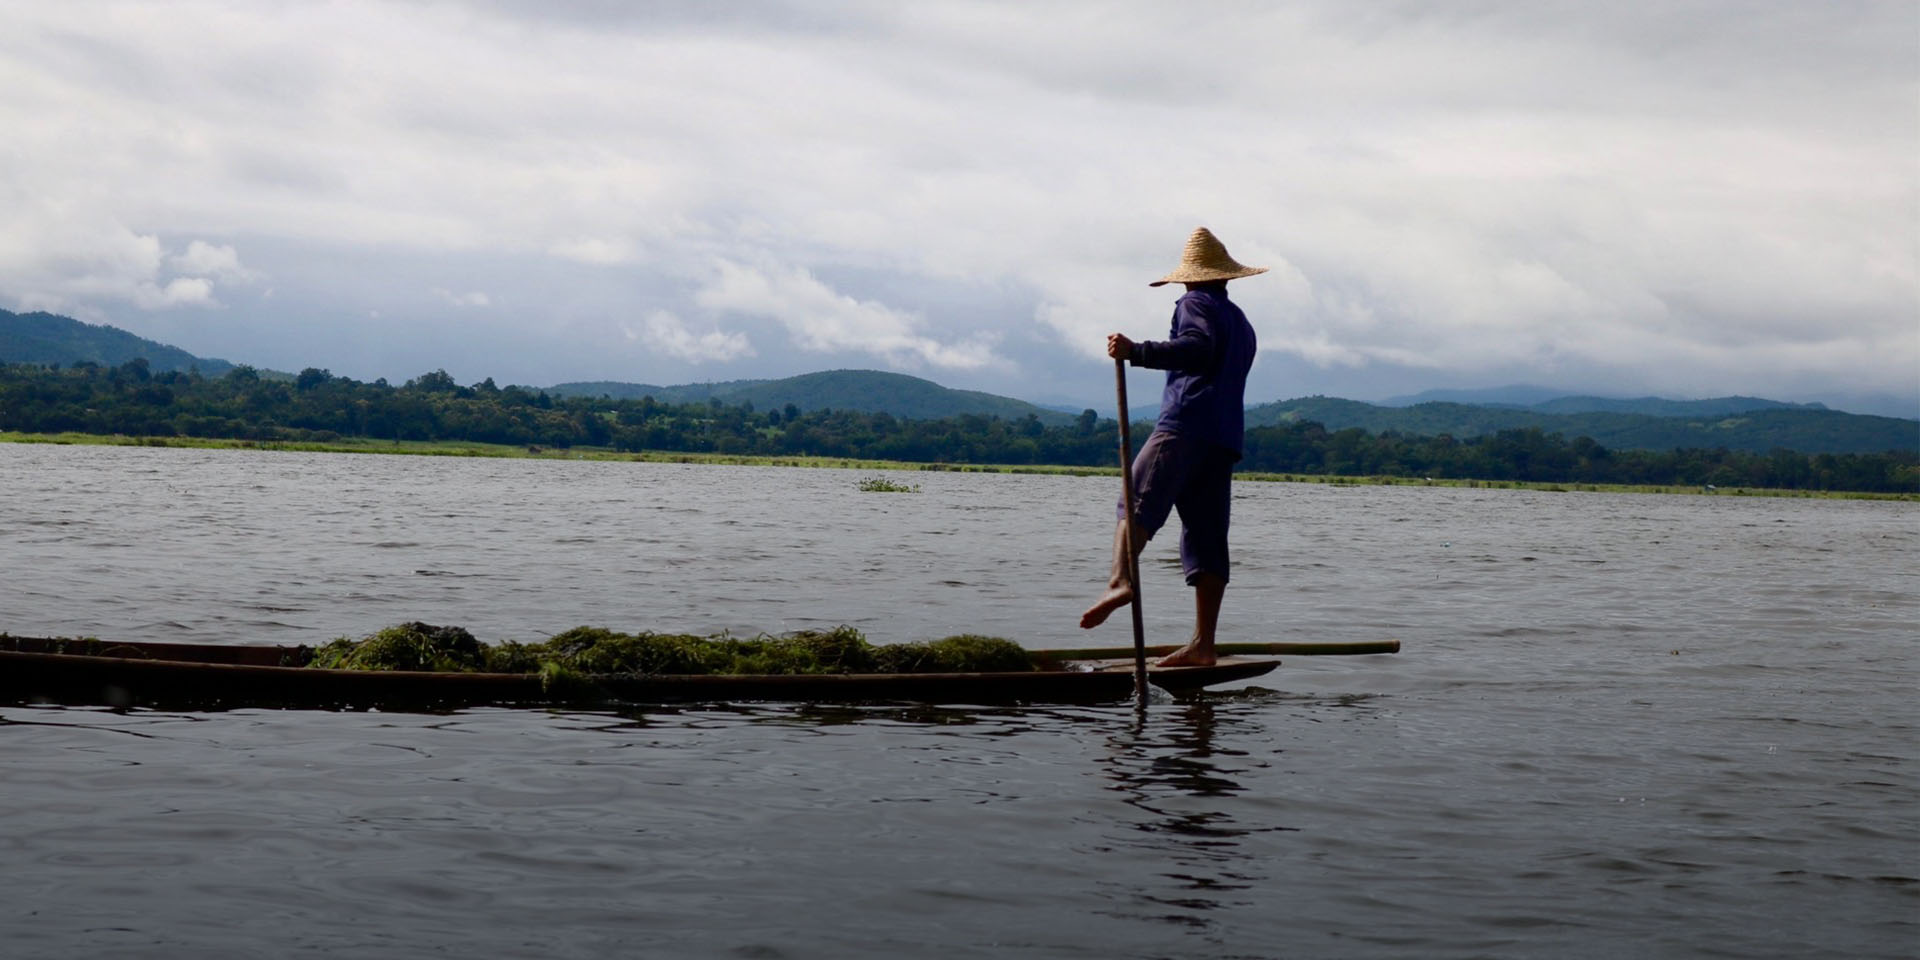 Fisher harvesting aquatic plants on Inle Lake, Myanmar.